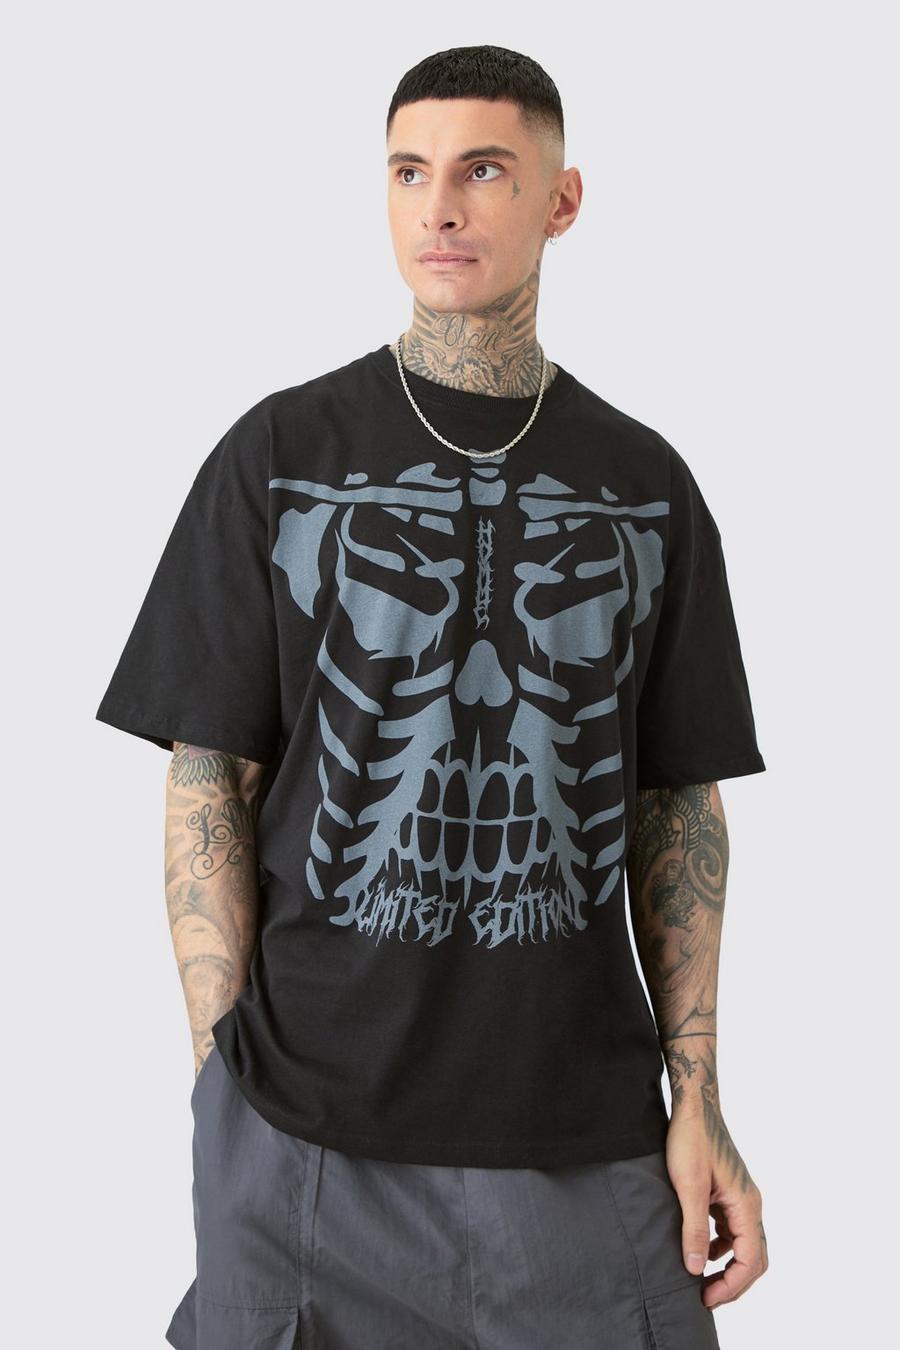 Camiseta Tall negra con estampado gráfico de esqueleto, Black